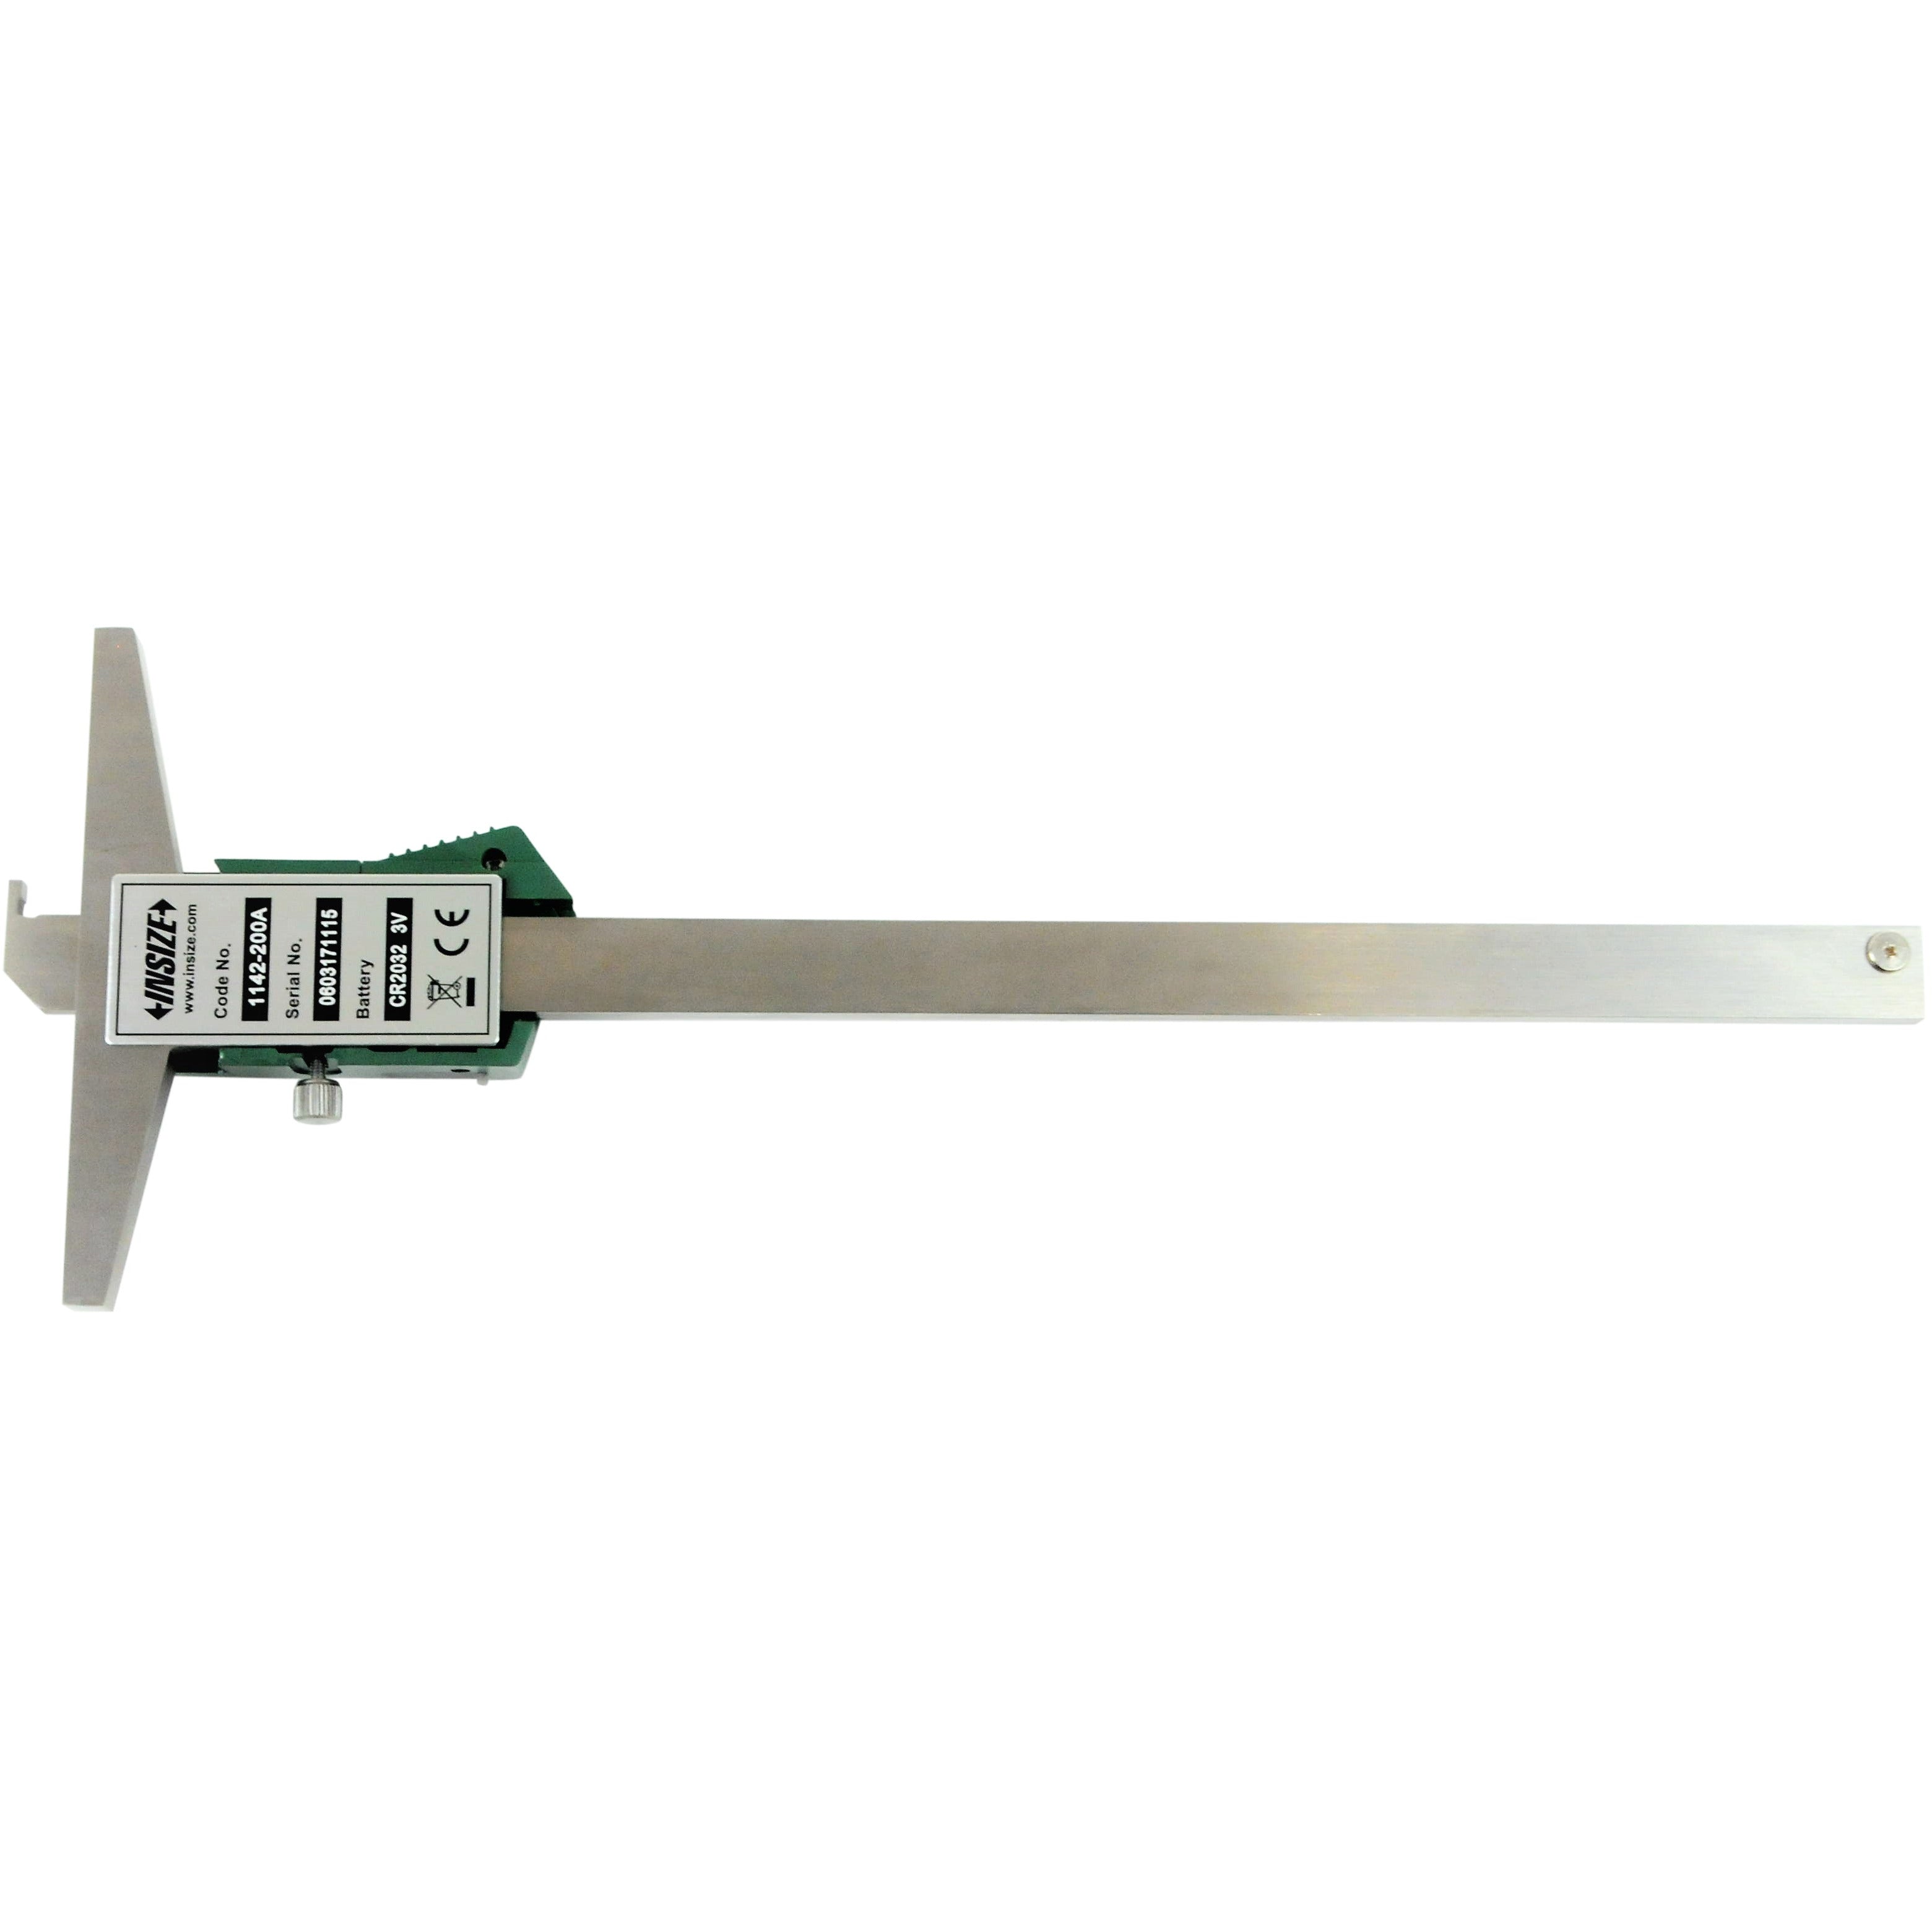 Insize Digital Hook Depth Gauge 0-200mm / 0-8" Range Series 1142-200A